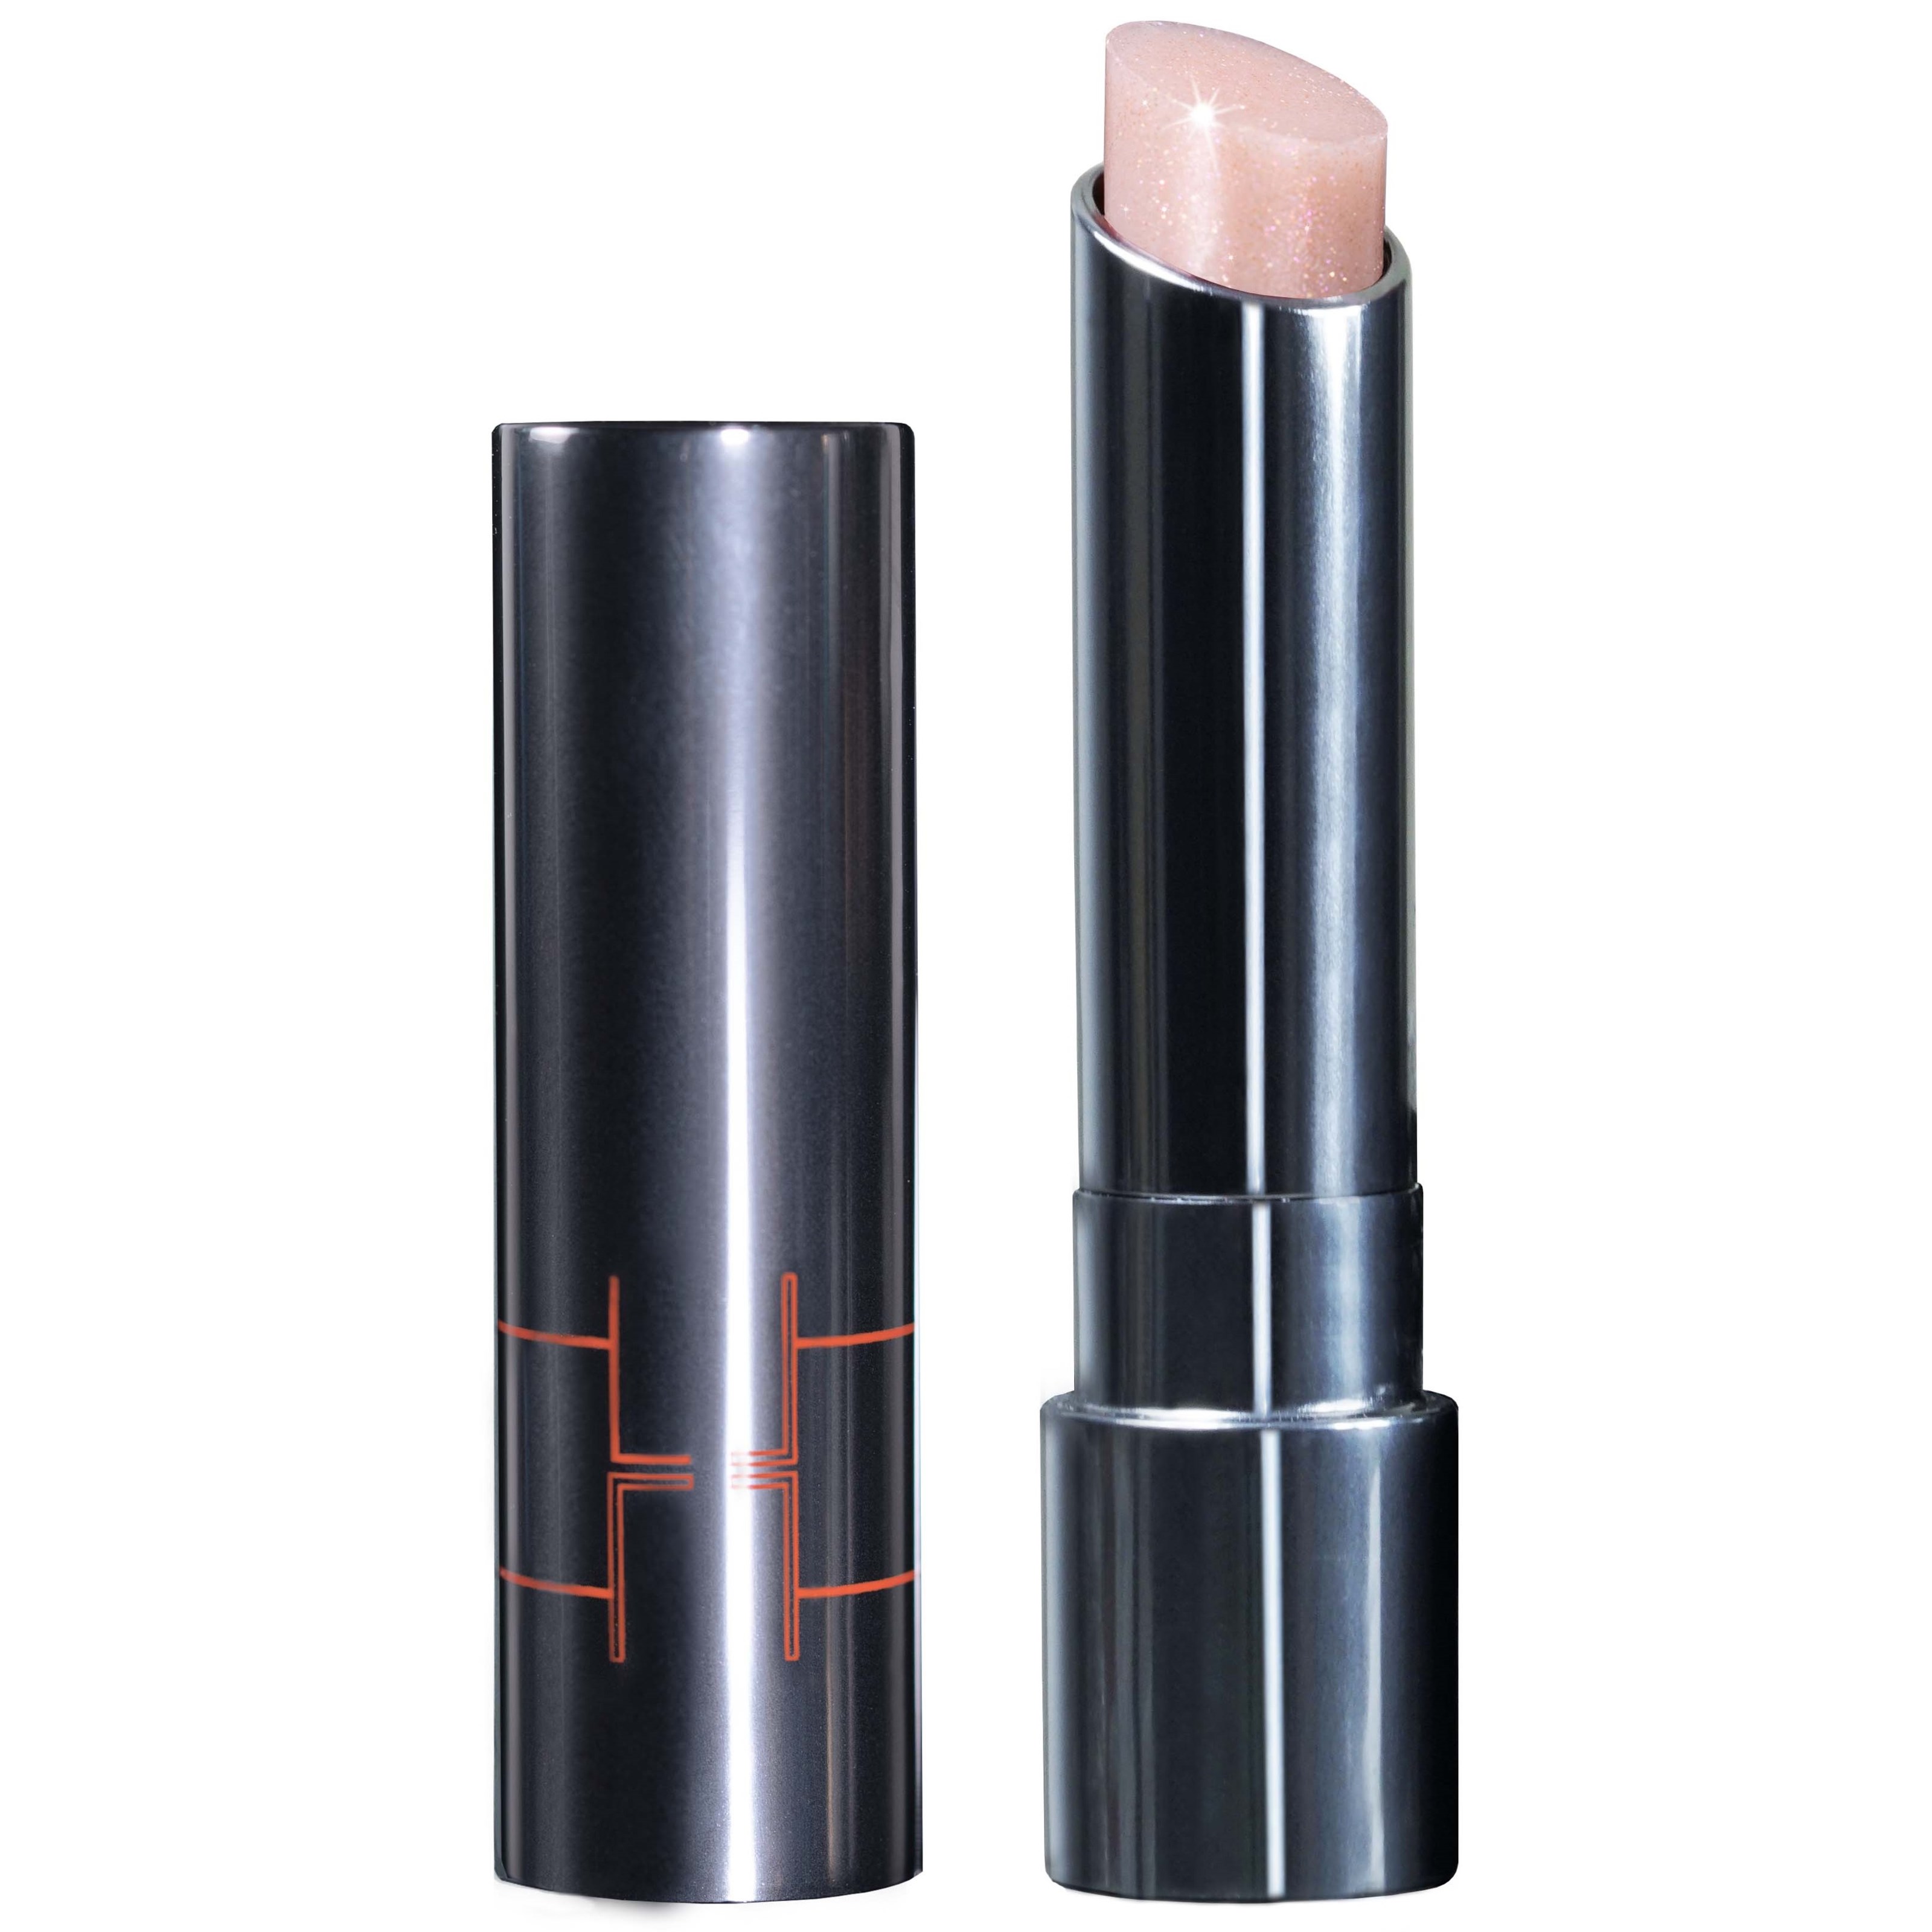 LH cosmetics Fantastick Multi-use Lipstick SPF15 Extra